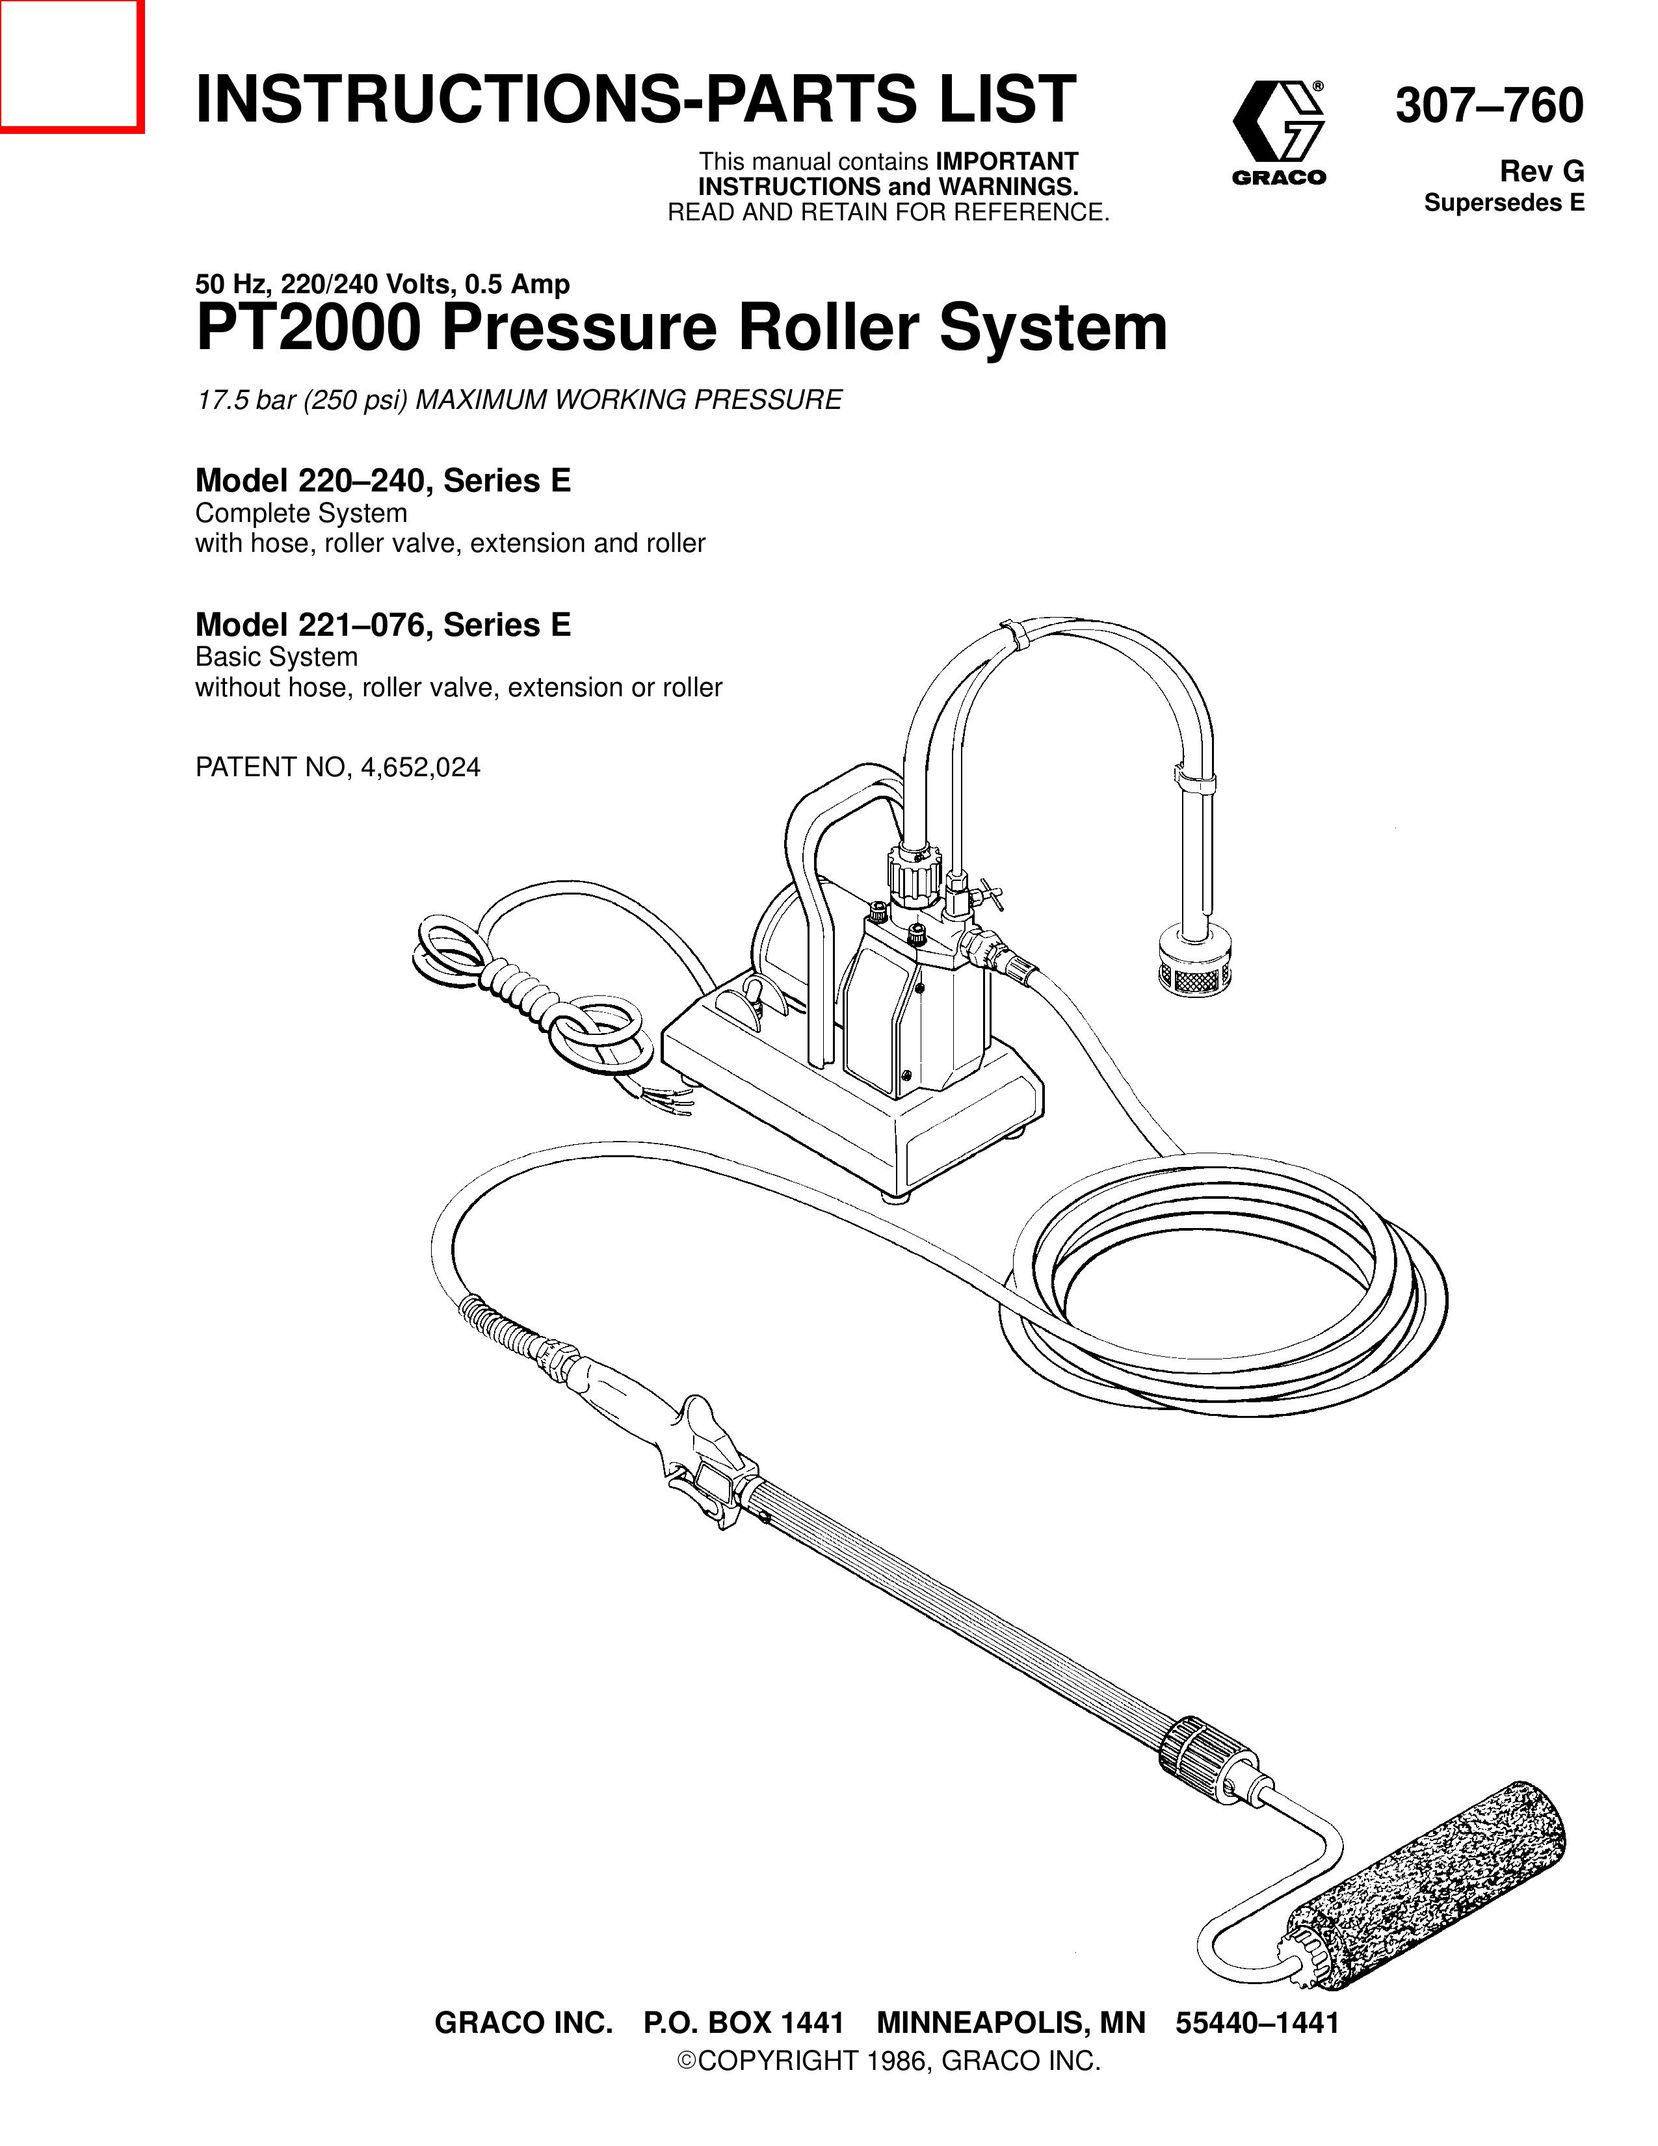 Graco Inc. 221076 Power Roller User Manual